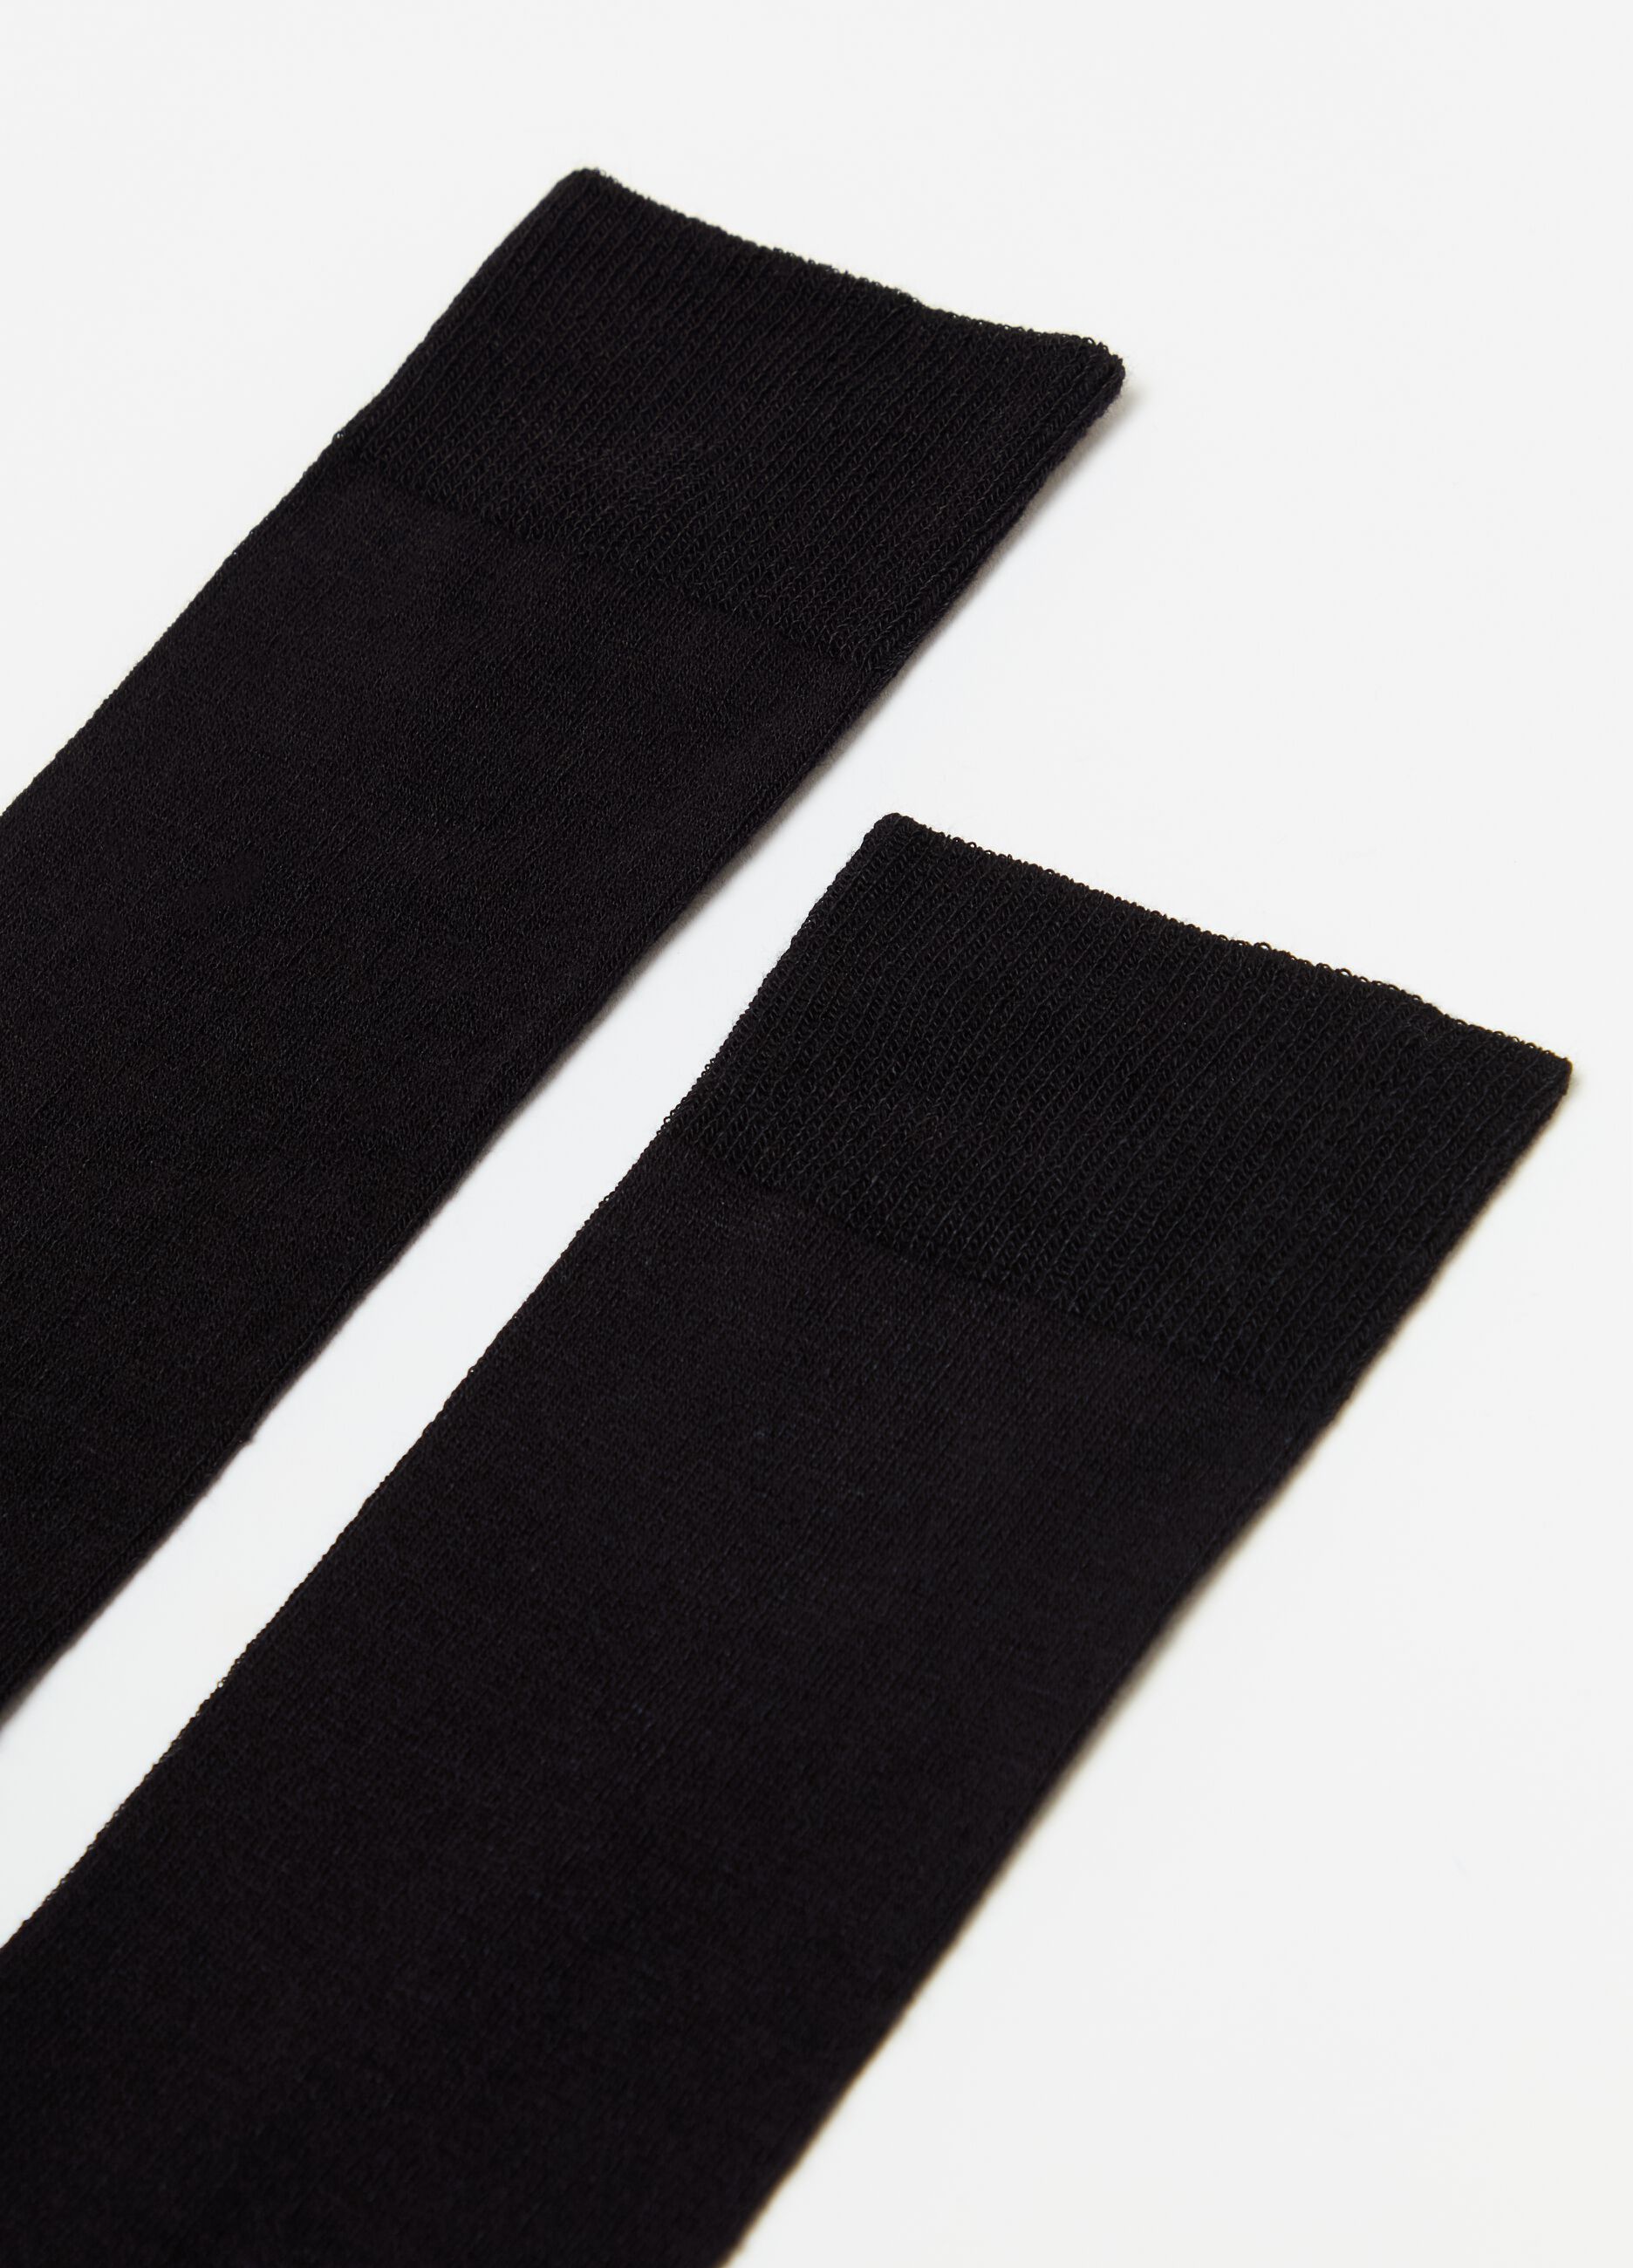 Two-pair pack socks short in bamboo viscose